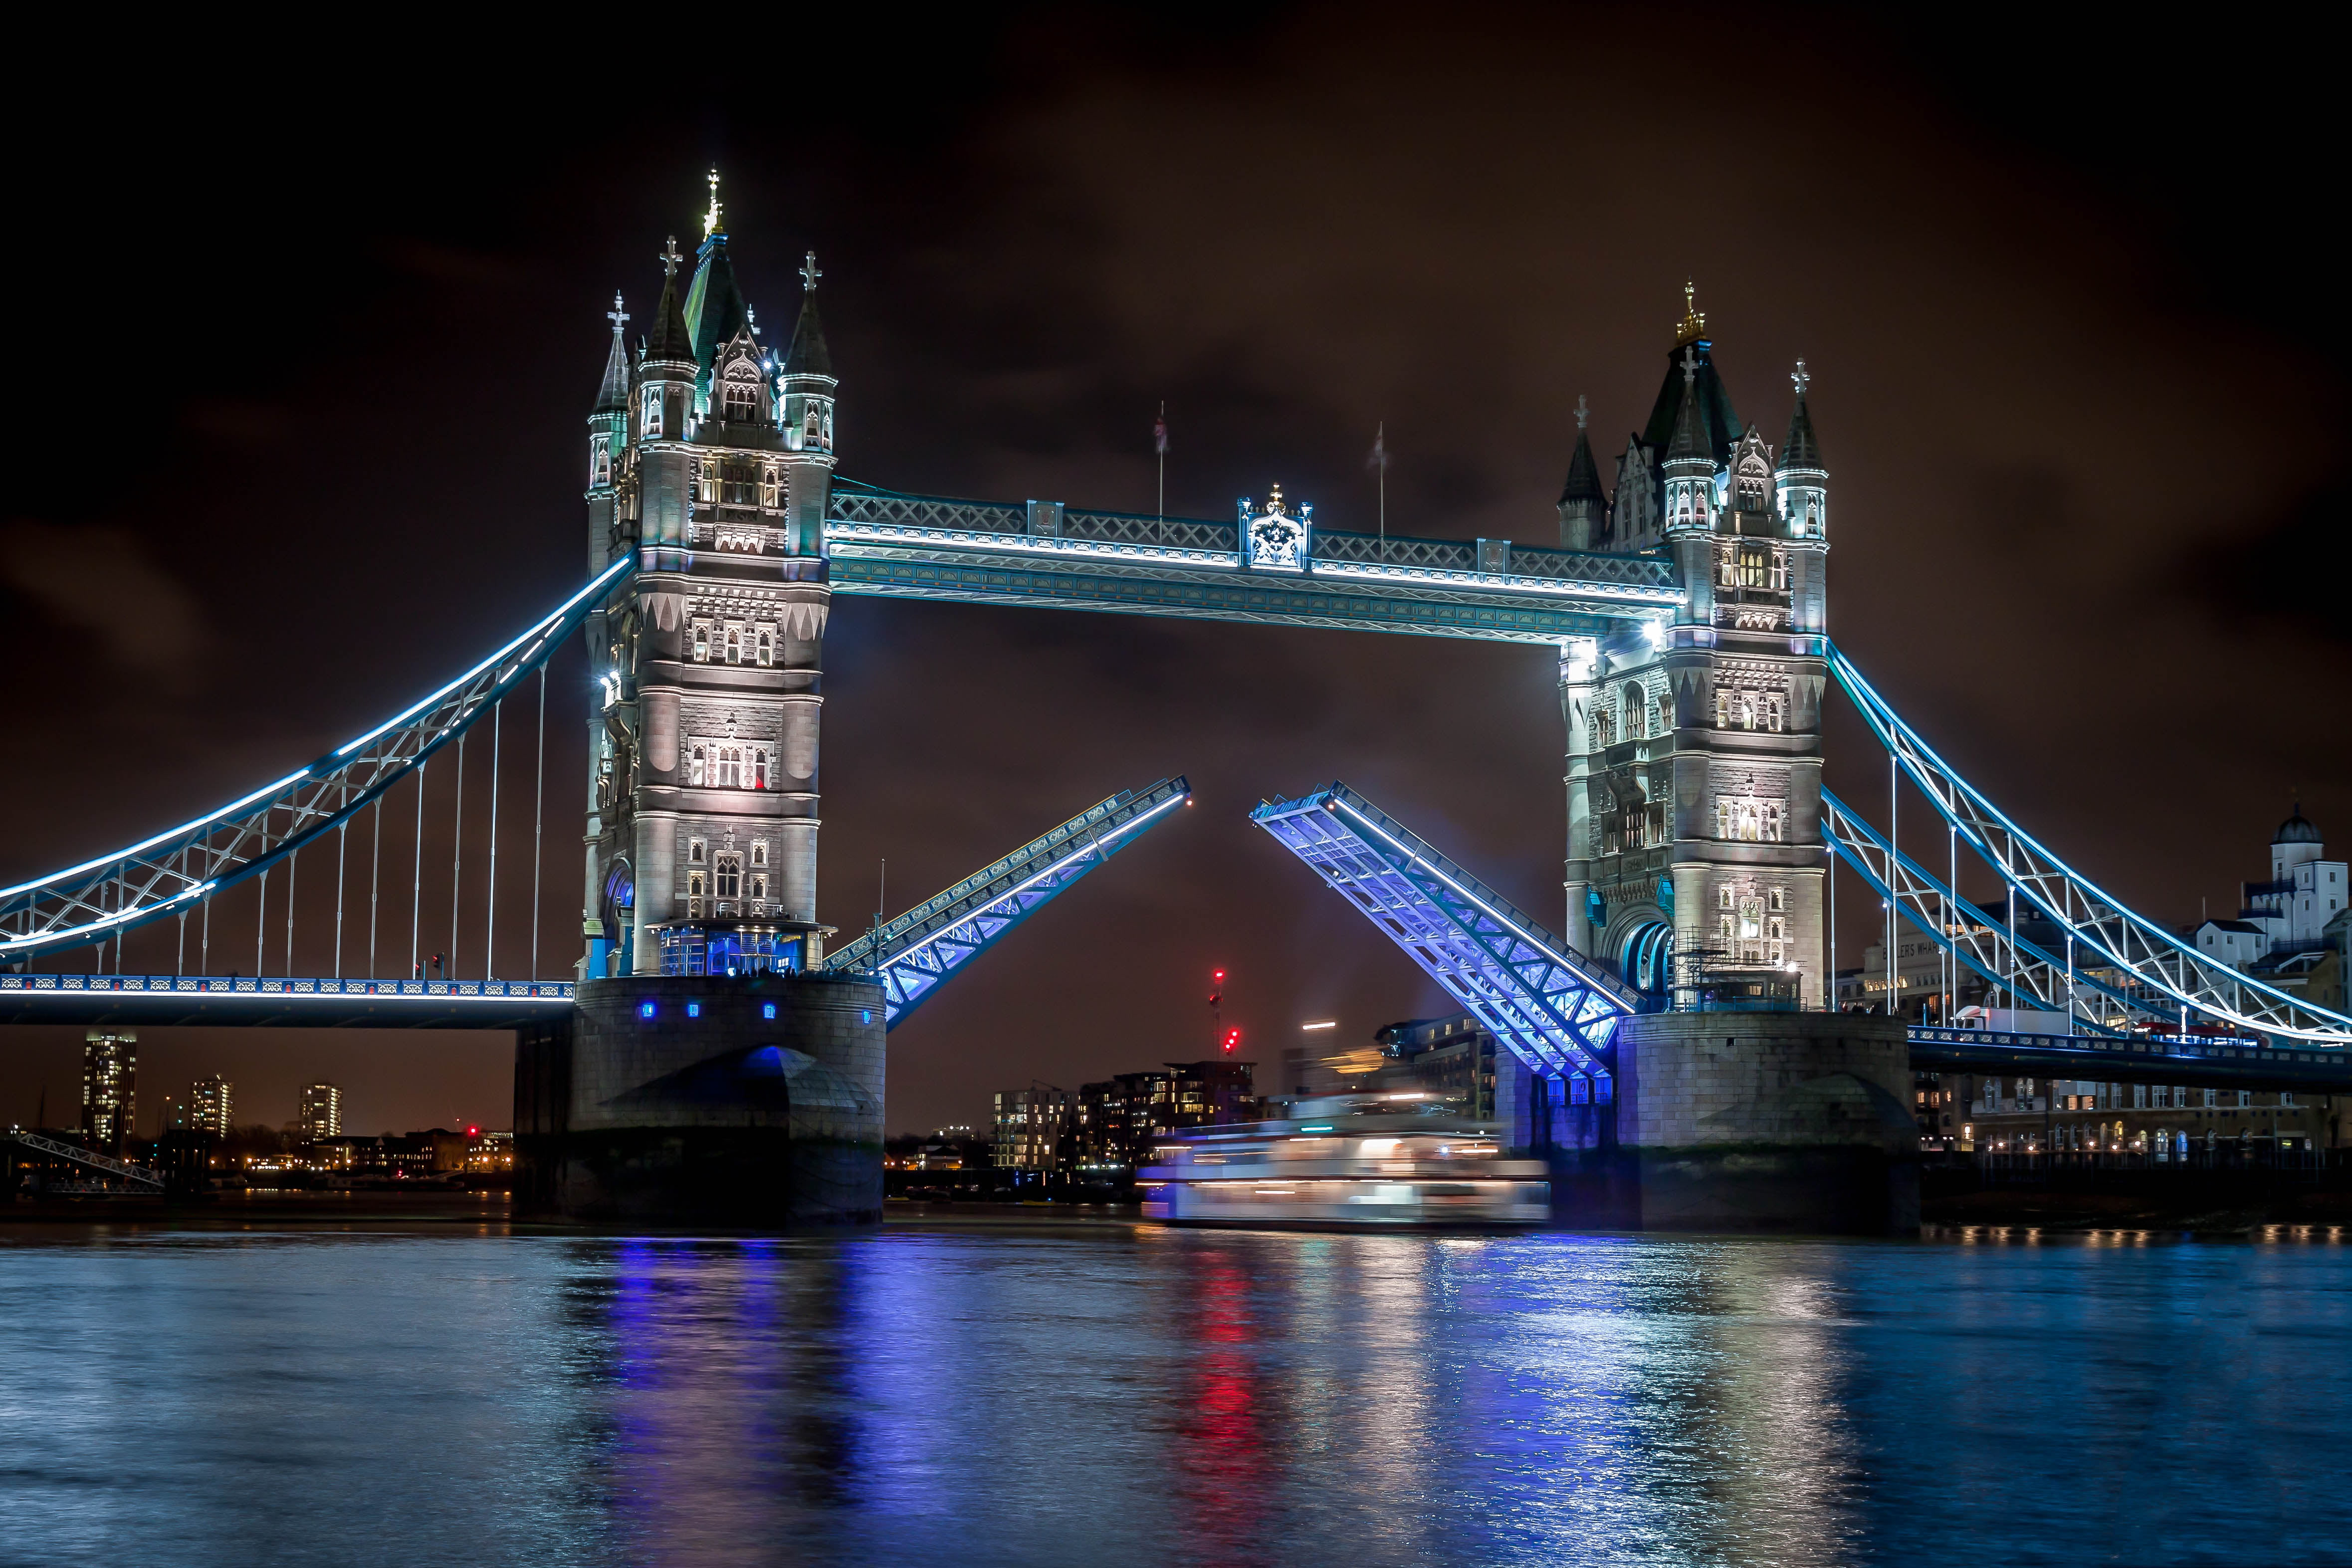 London Tower Bridge at nighttime